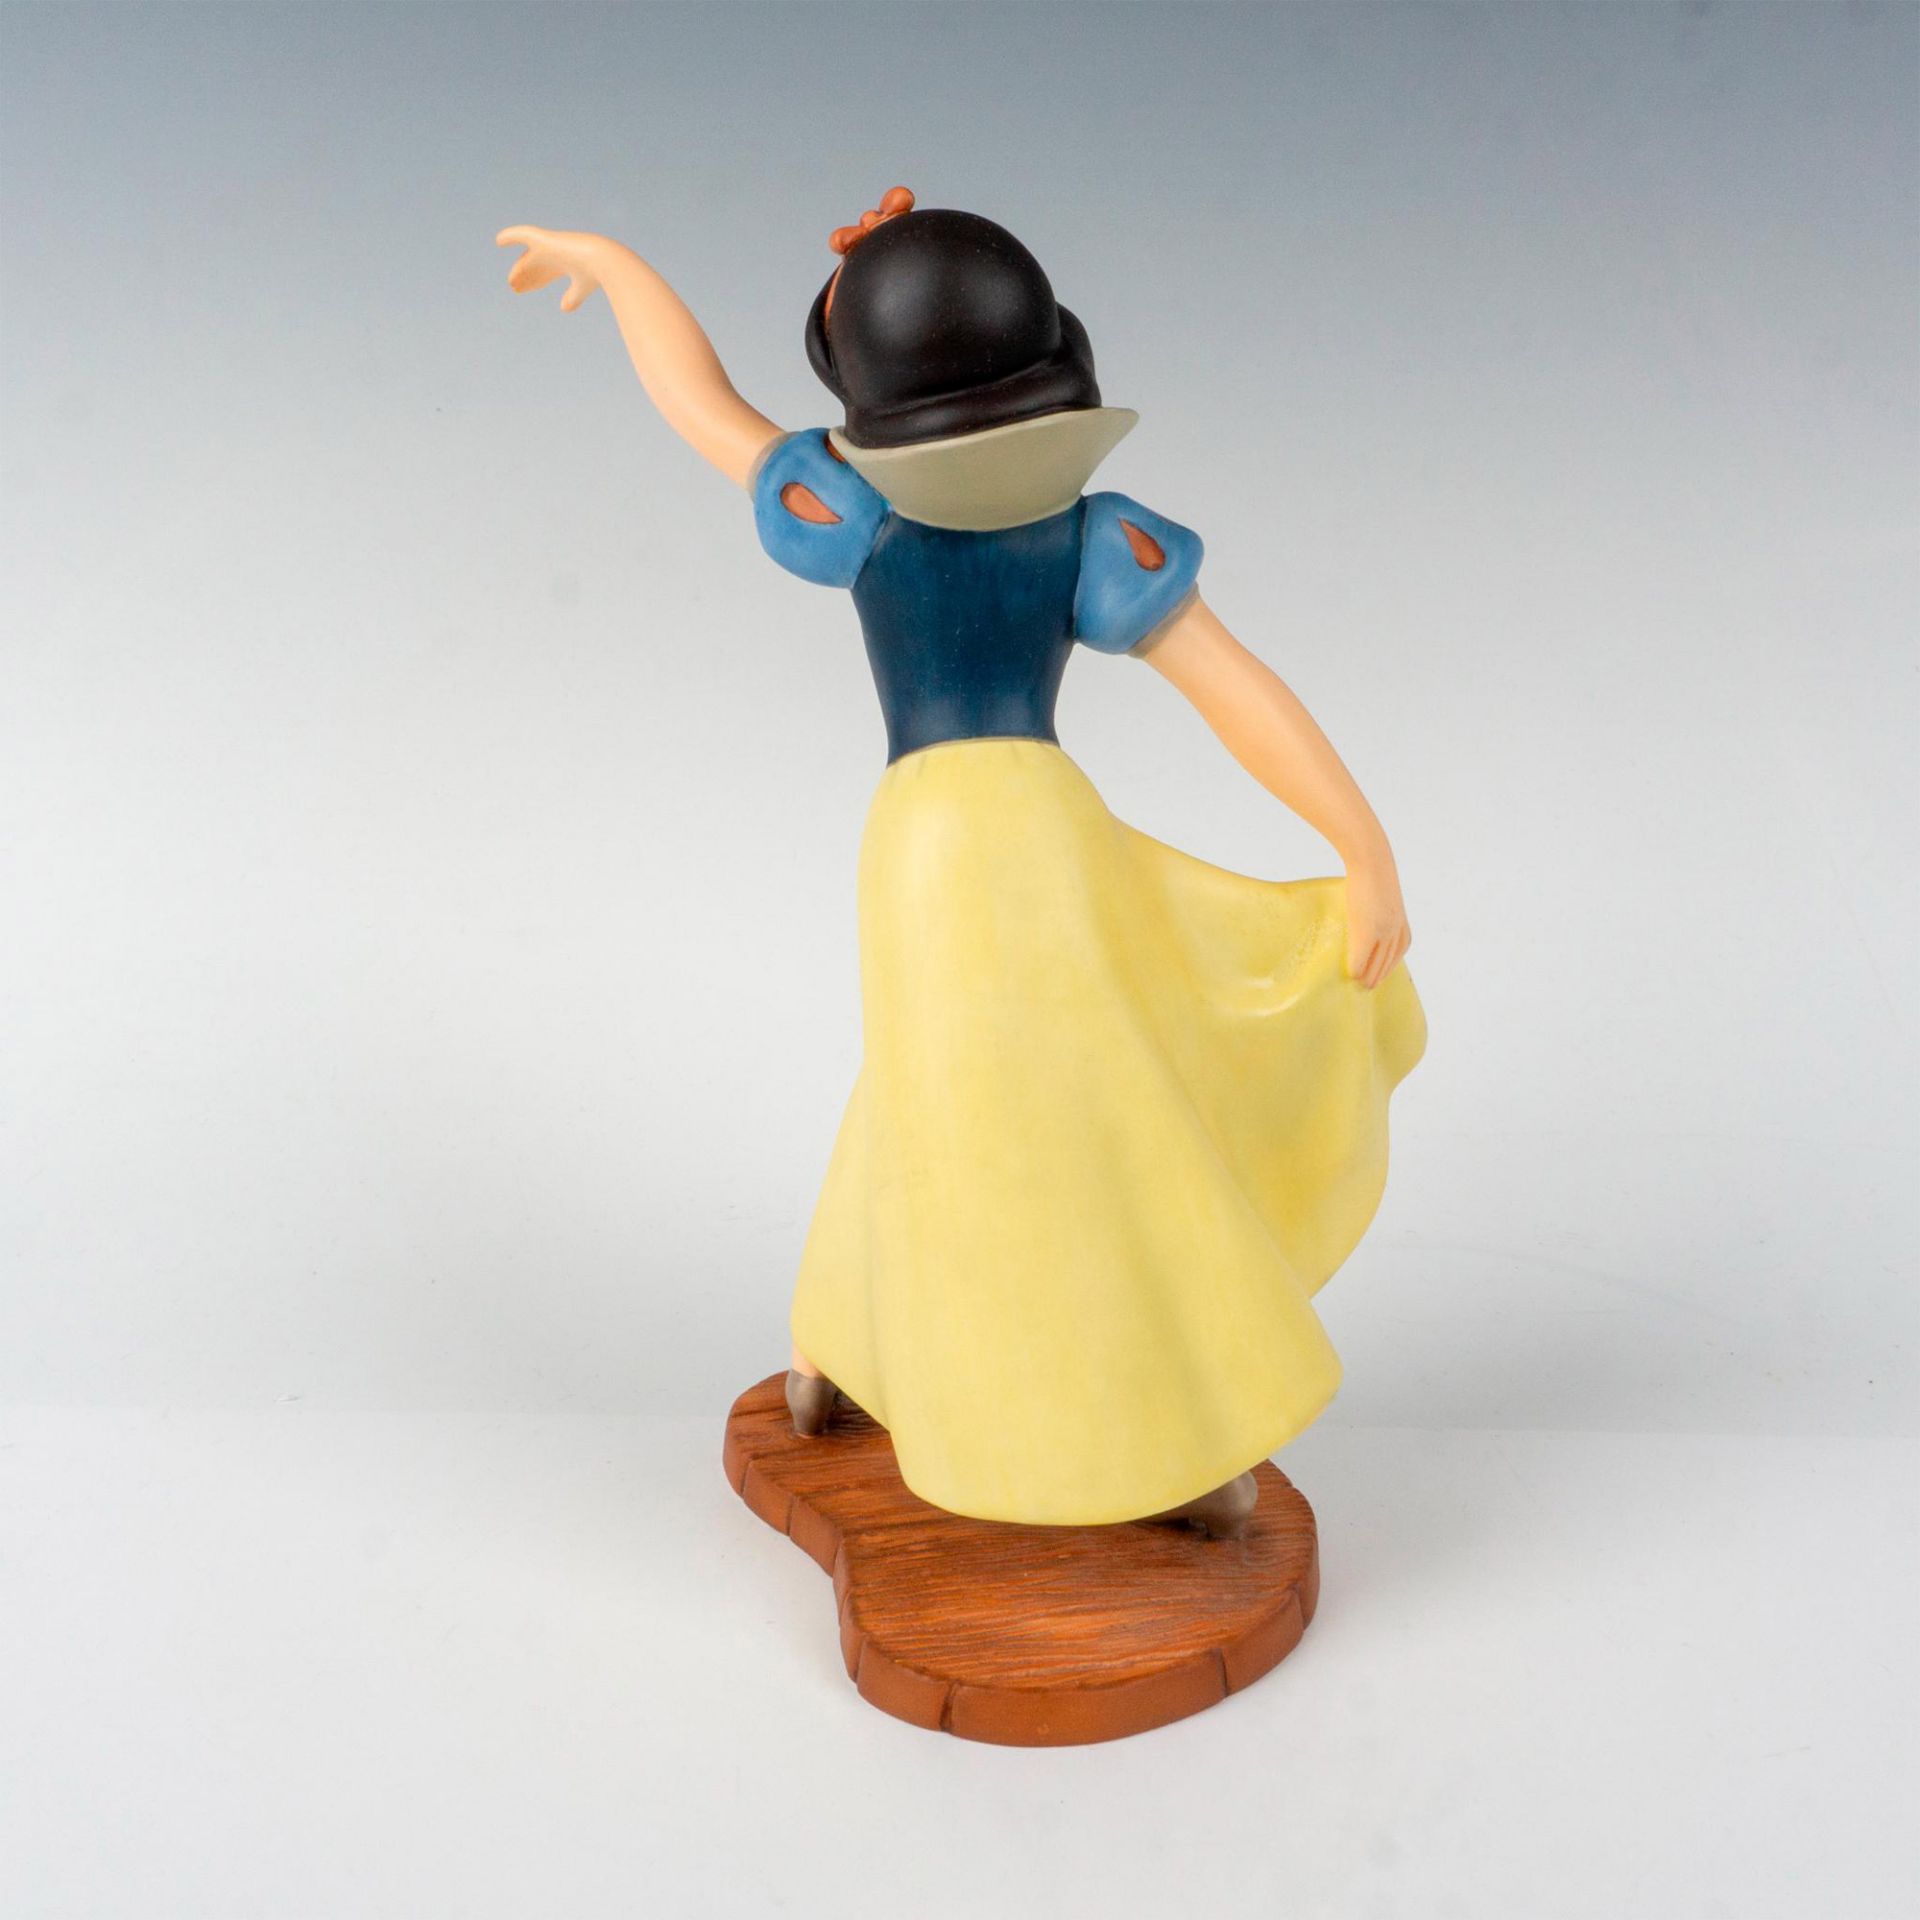 Walt Disney Classics Collection Figurine, Snow White - Image 2 of 4